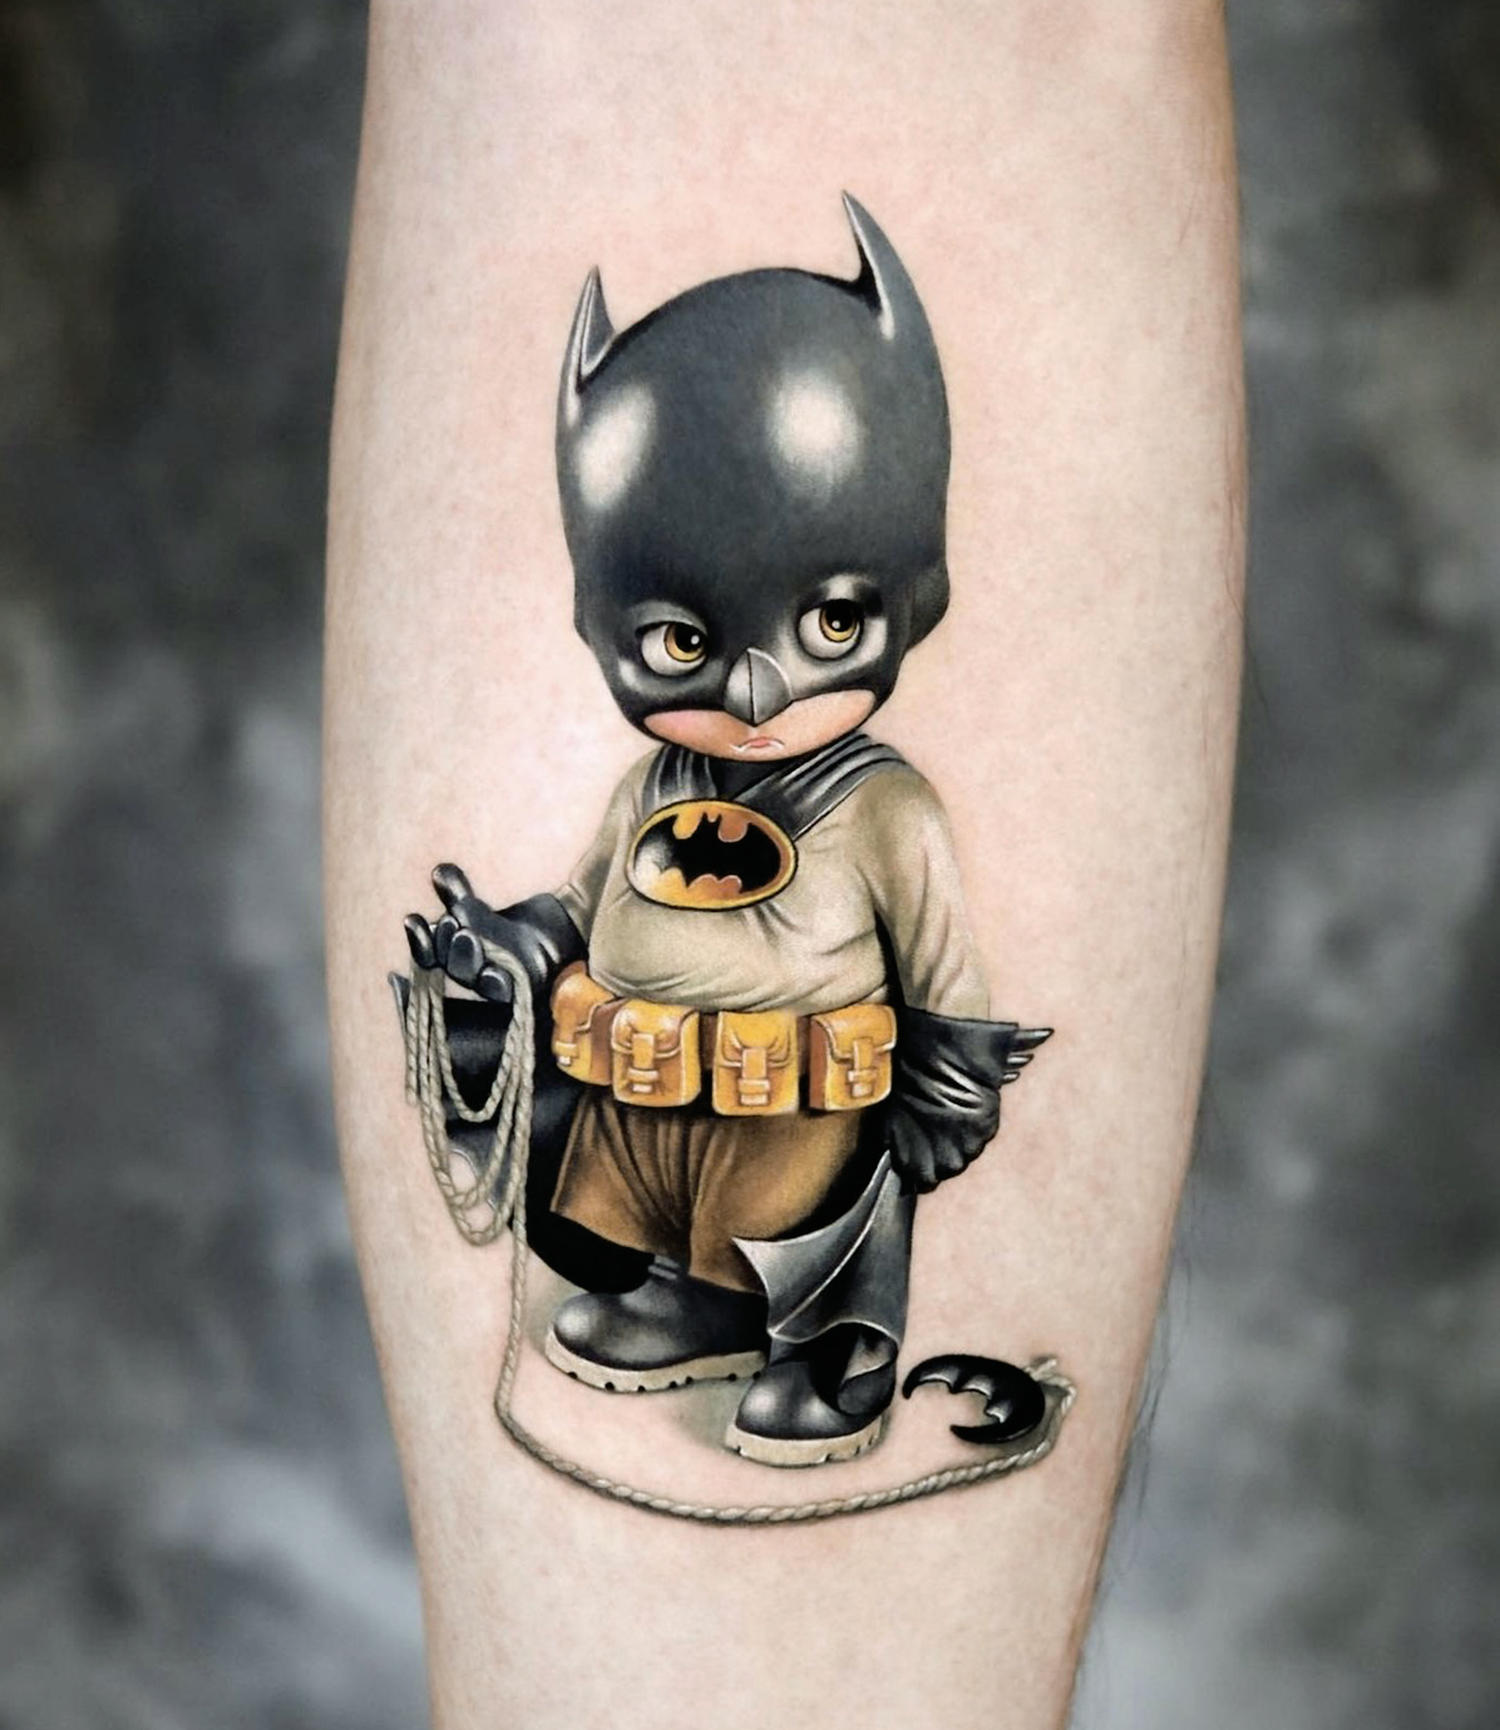 3d tattoo -- Baby batman rendered in exacting 3D detail